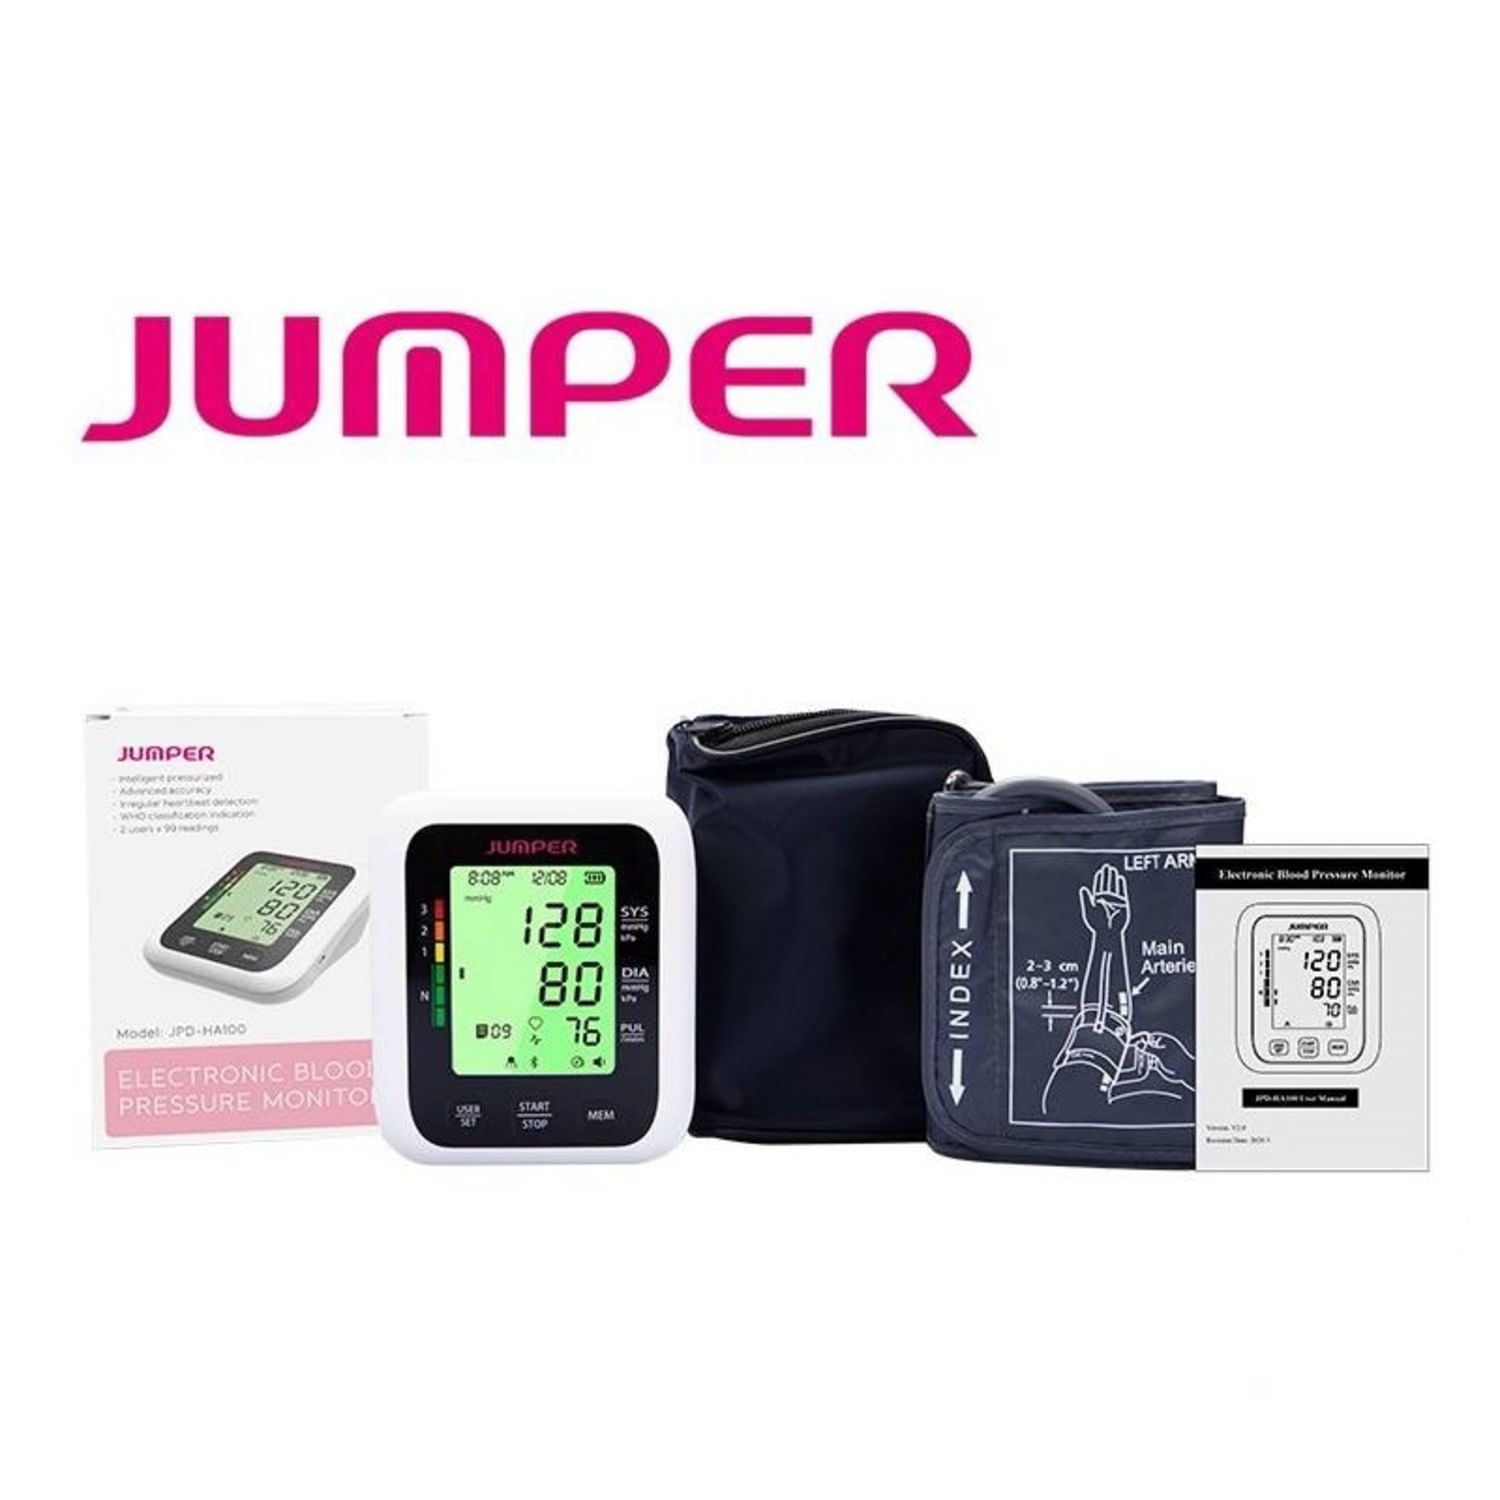 Tensiometro Digital Brazo Jumper Modelo Jpd Ha100